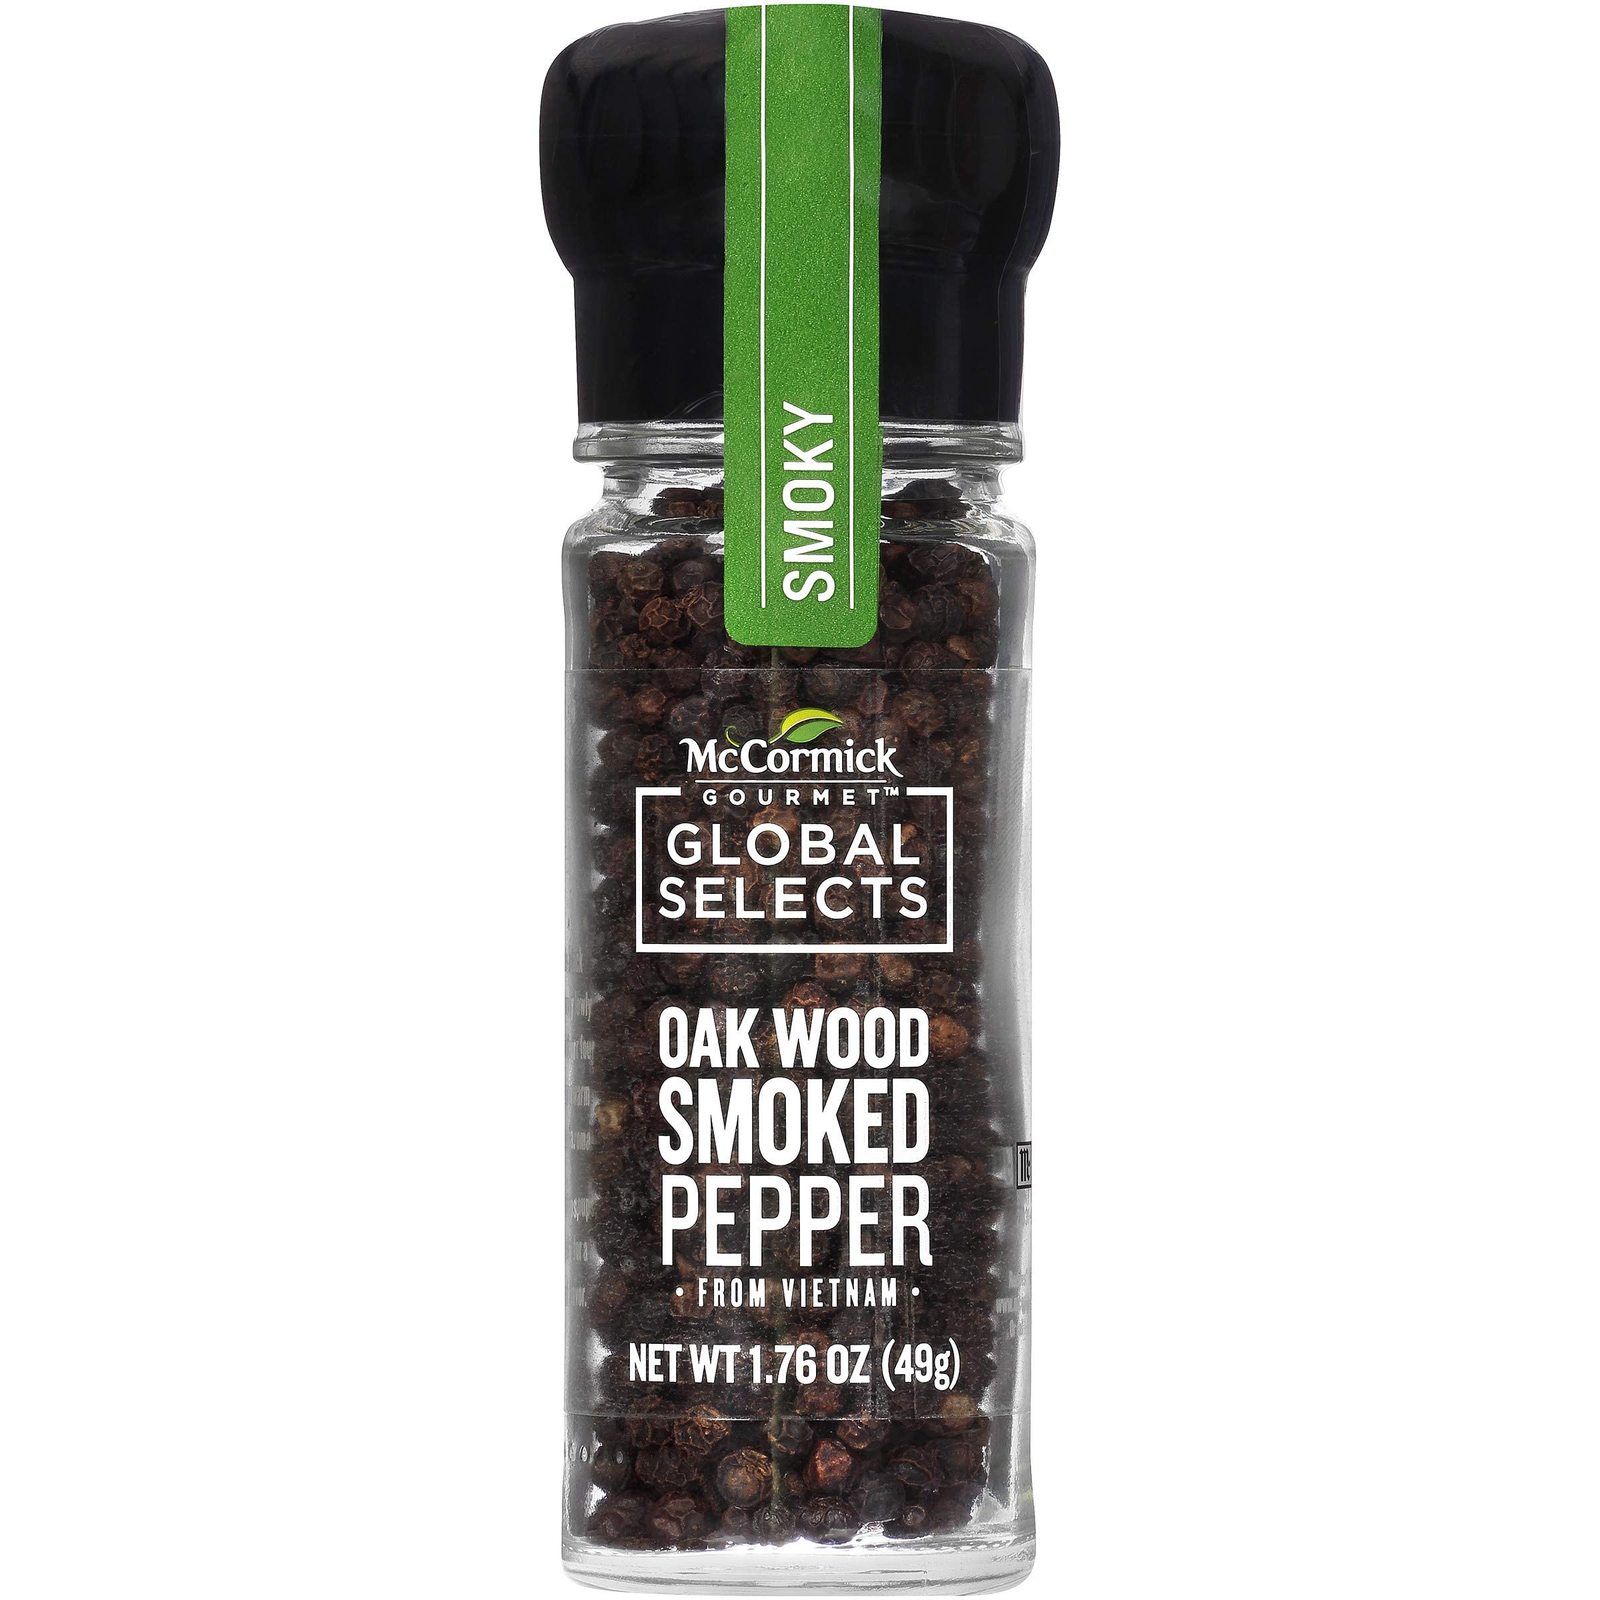 McCormick Gourmet Global Selects Oak Wood Smoked Pepper from Vietnam, 1.76 oz - $8.90